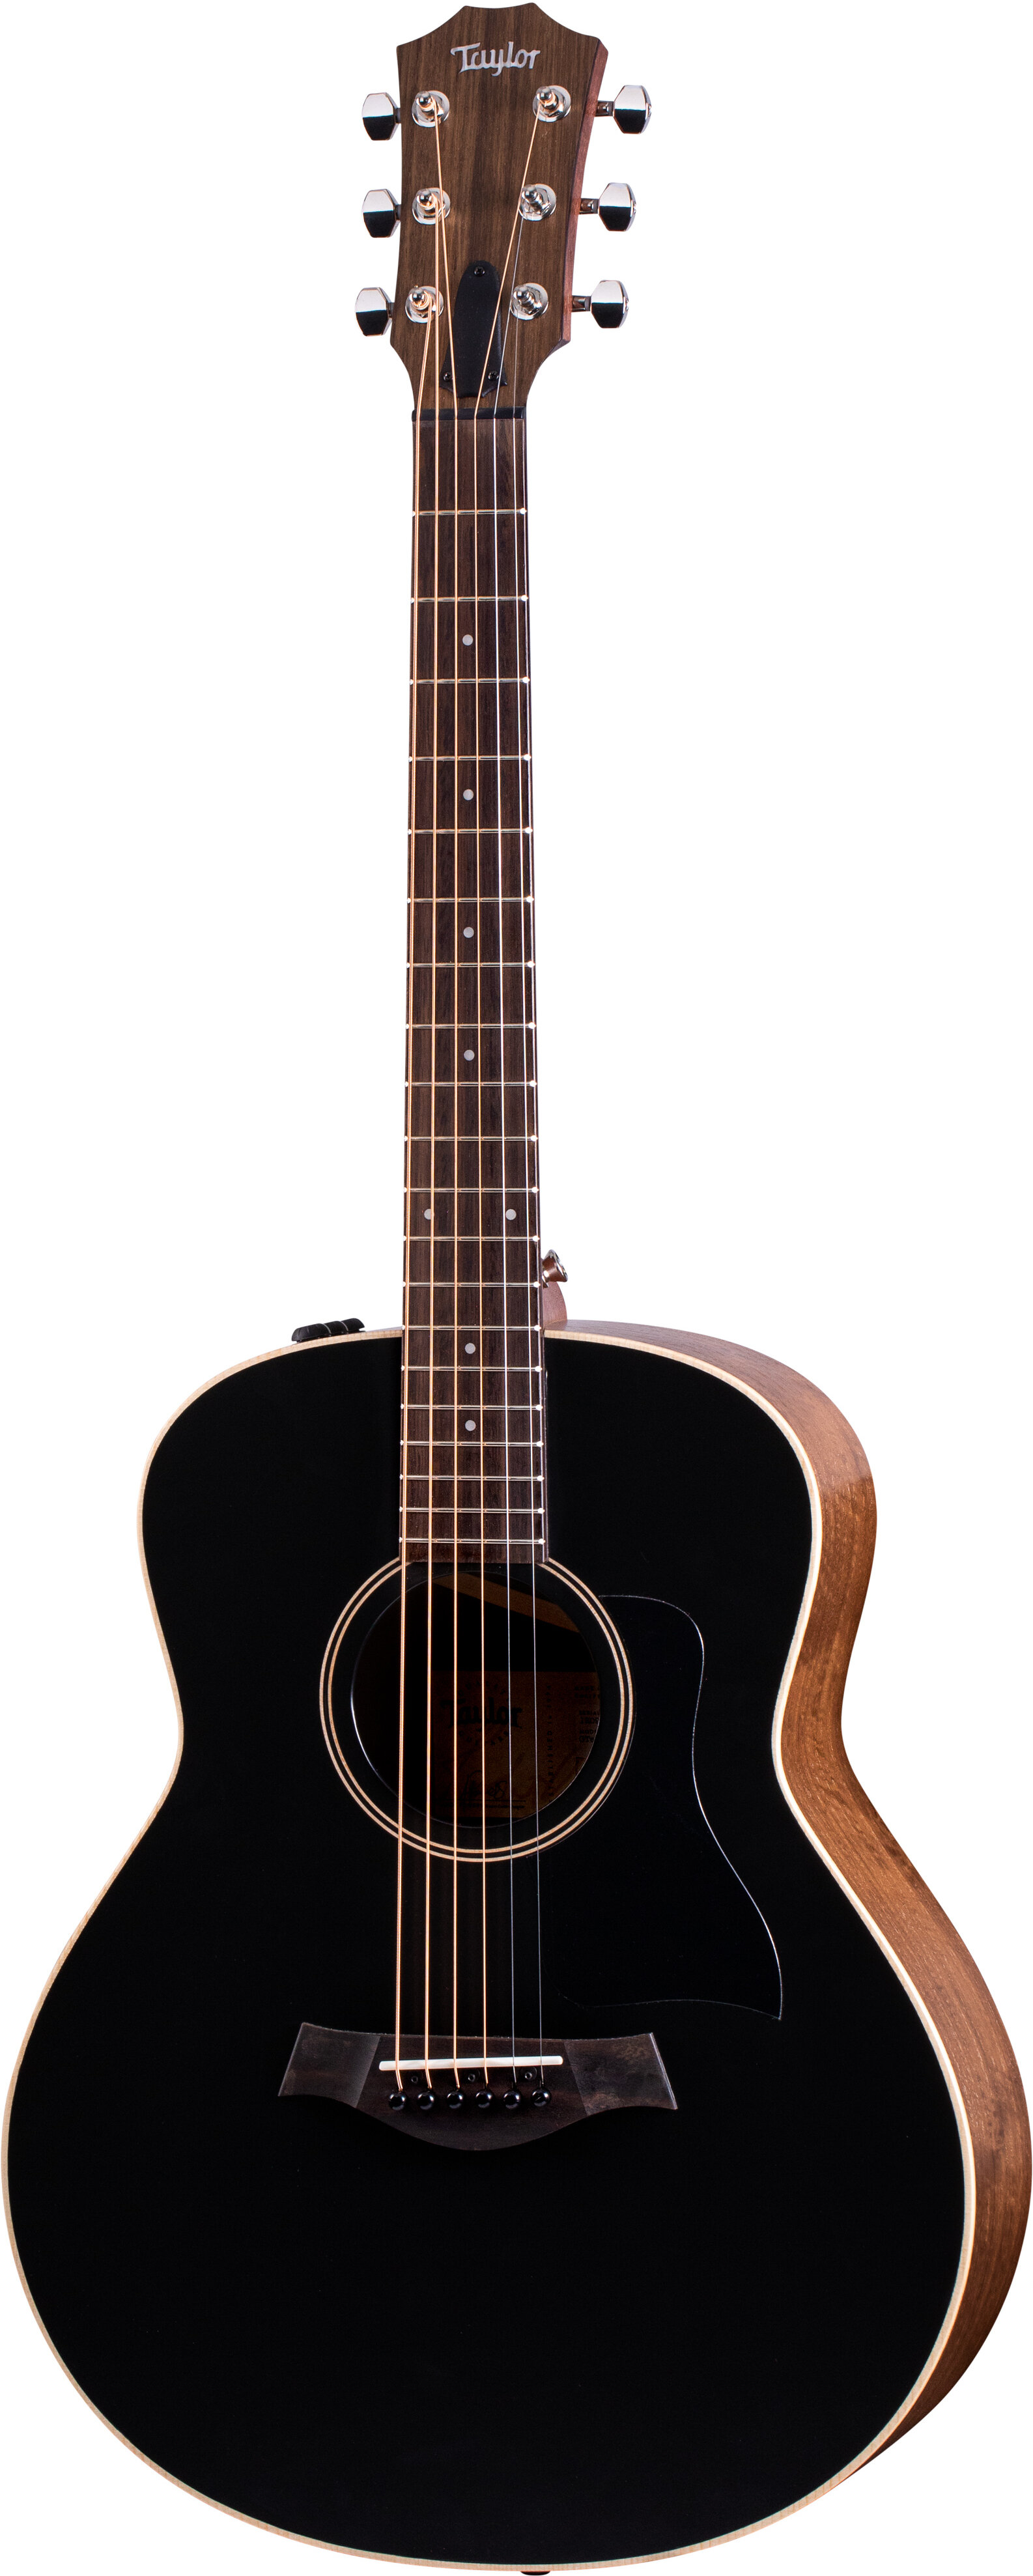 Taylor GTe Blacktop Acoustic Electric Guitar -  Taylor Guitars